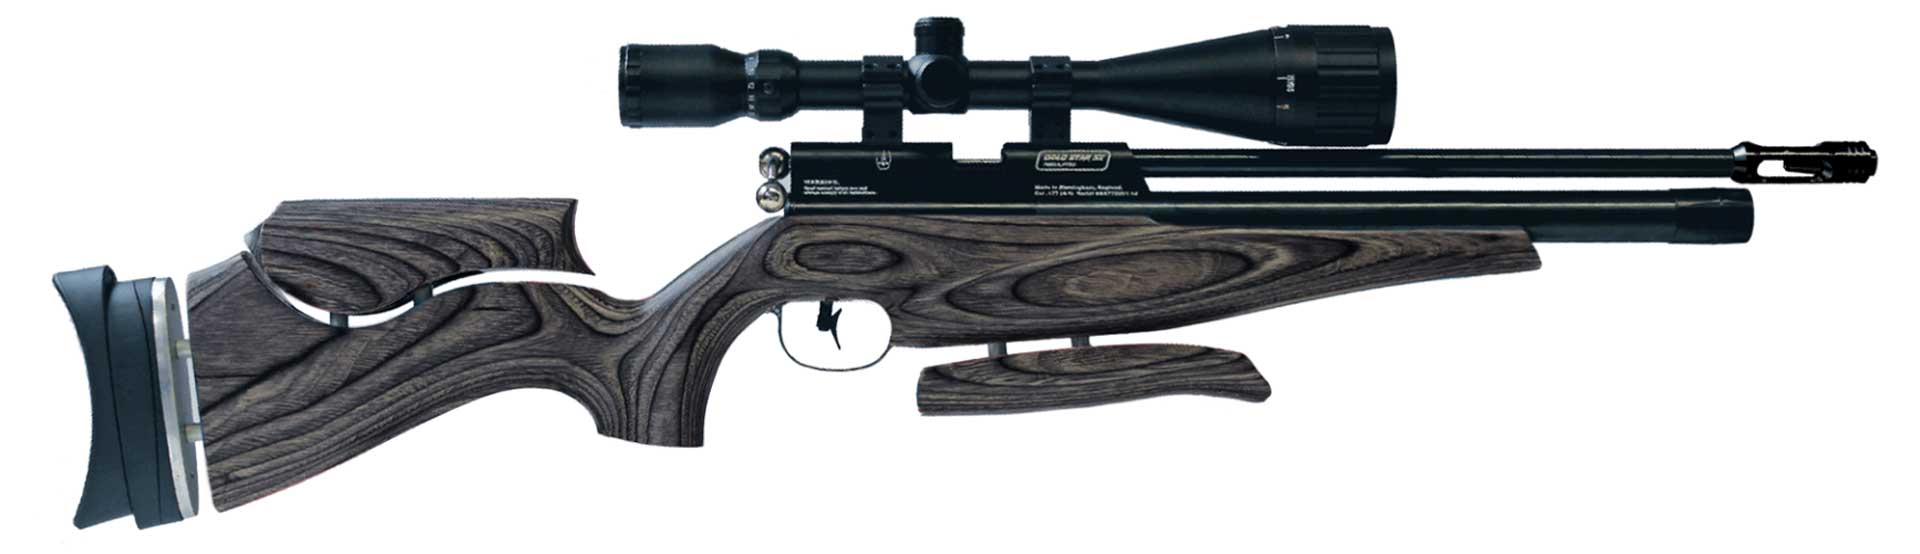 right side air rifle gun wood metal black steel riflescope